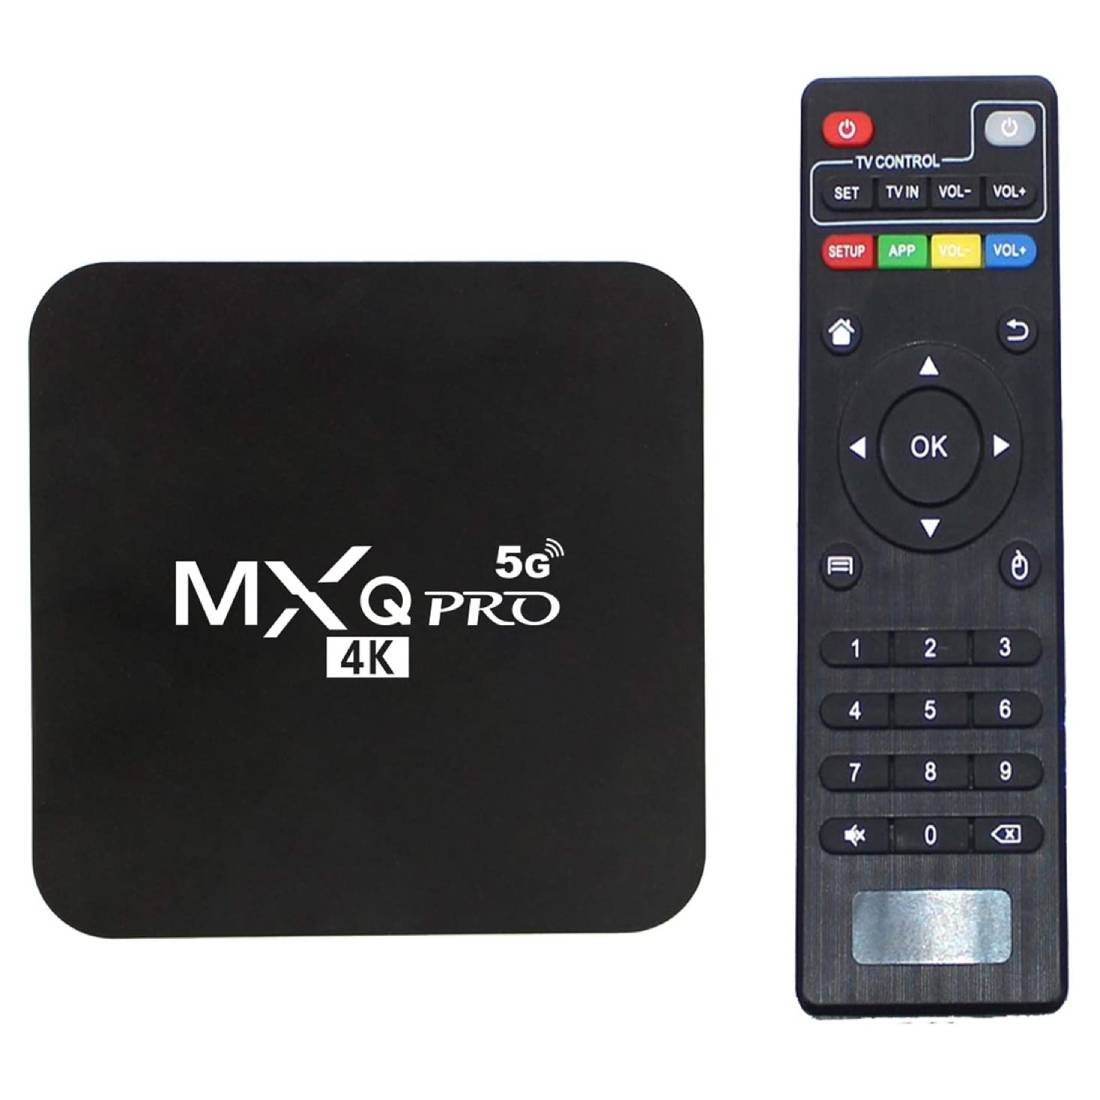 TV Box MXQ Pro 5G Android 10.0 TV Box, CICCI Pro 5G 2021 4K